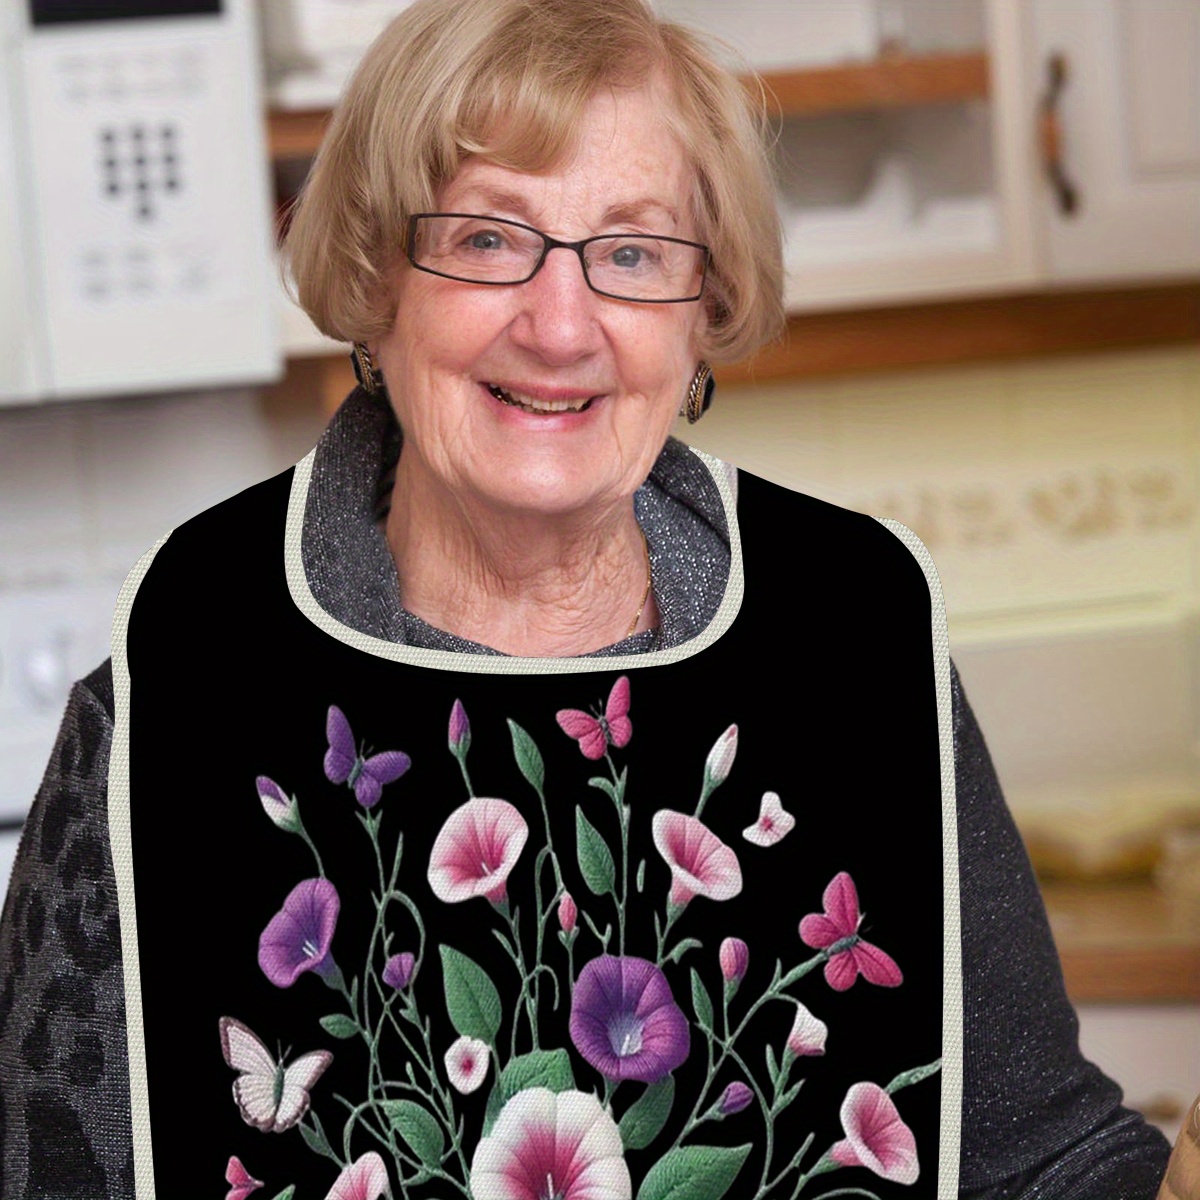 

Elegant Floral Linen Bib - Large, Washable Adult & Senior Dining Apron With Classic Design